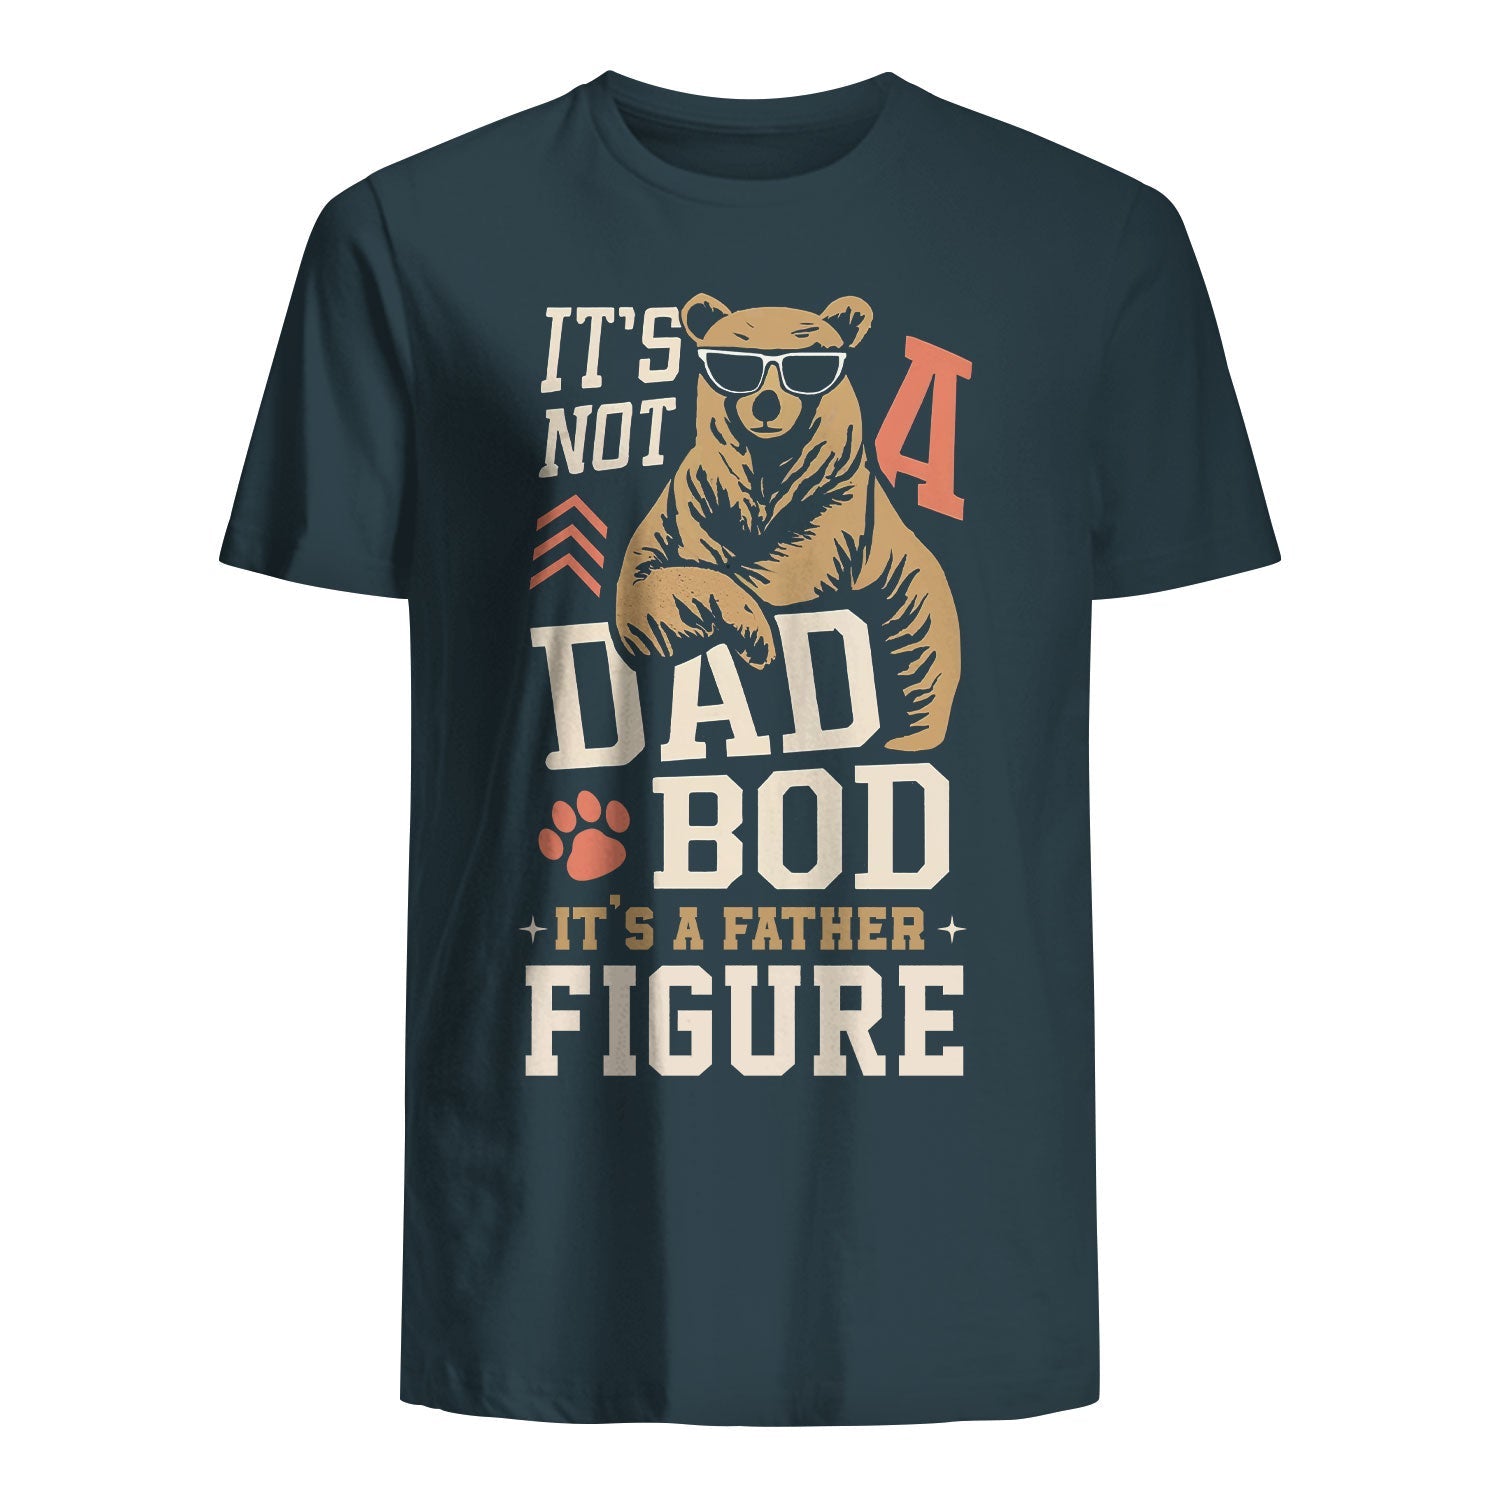 T-shirt for Dad - It's not a dad bod it's a father figure bear